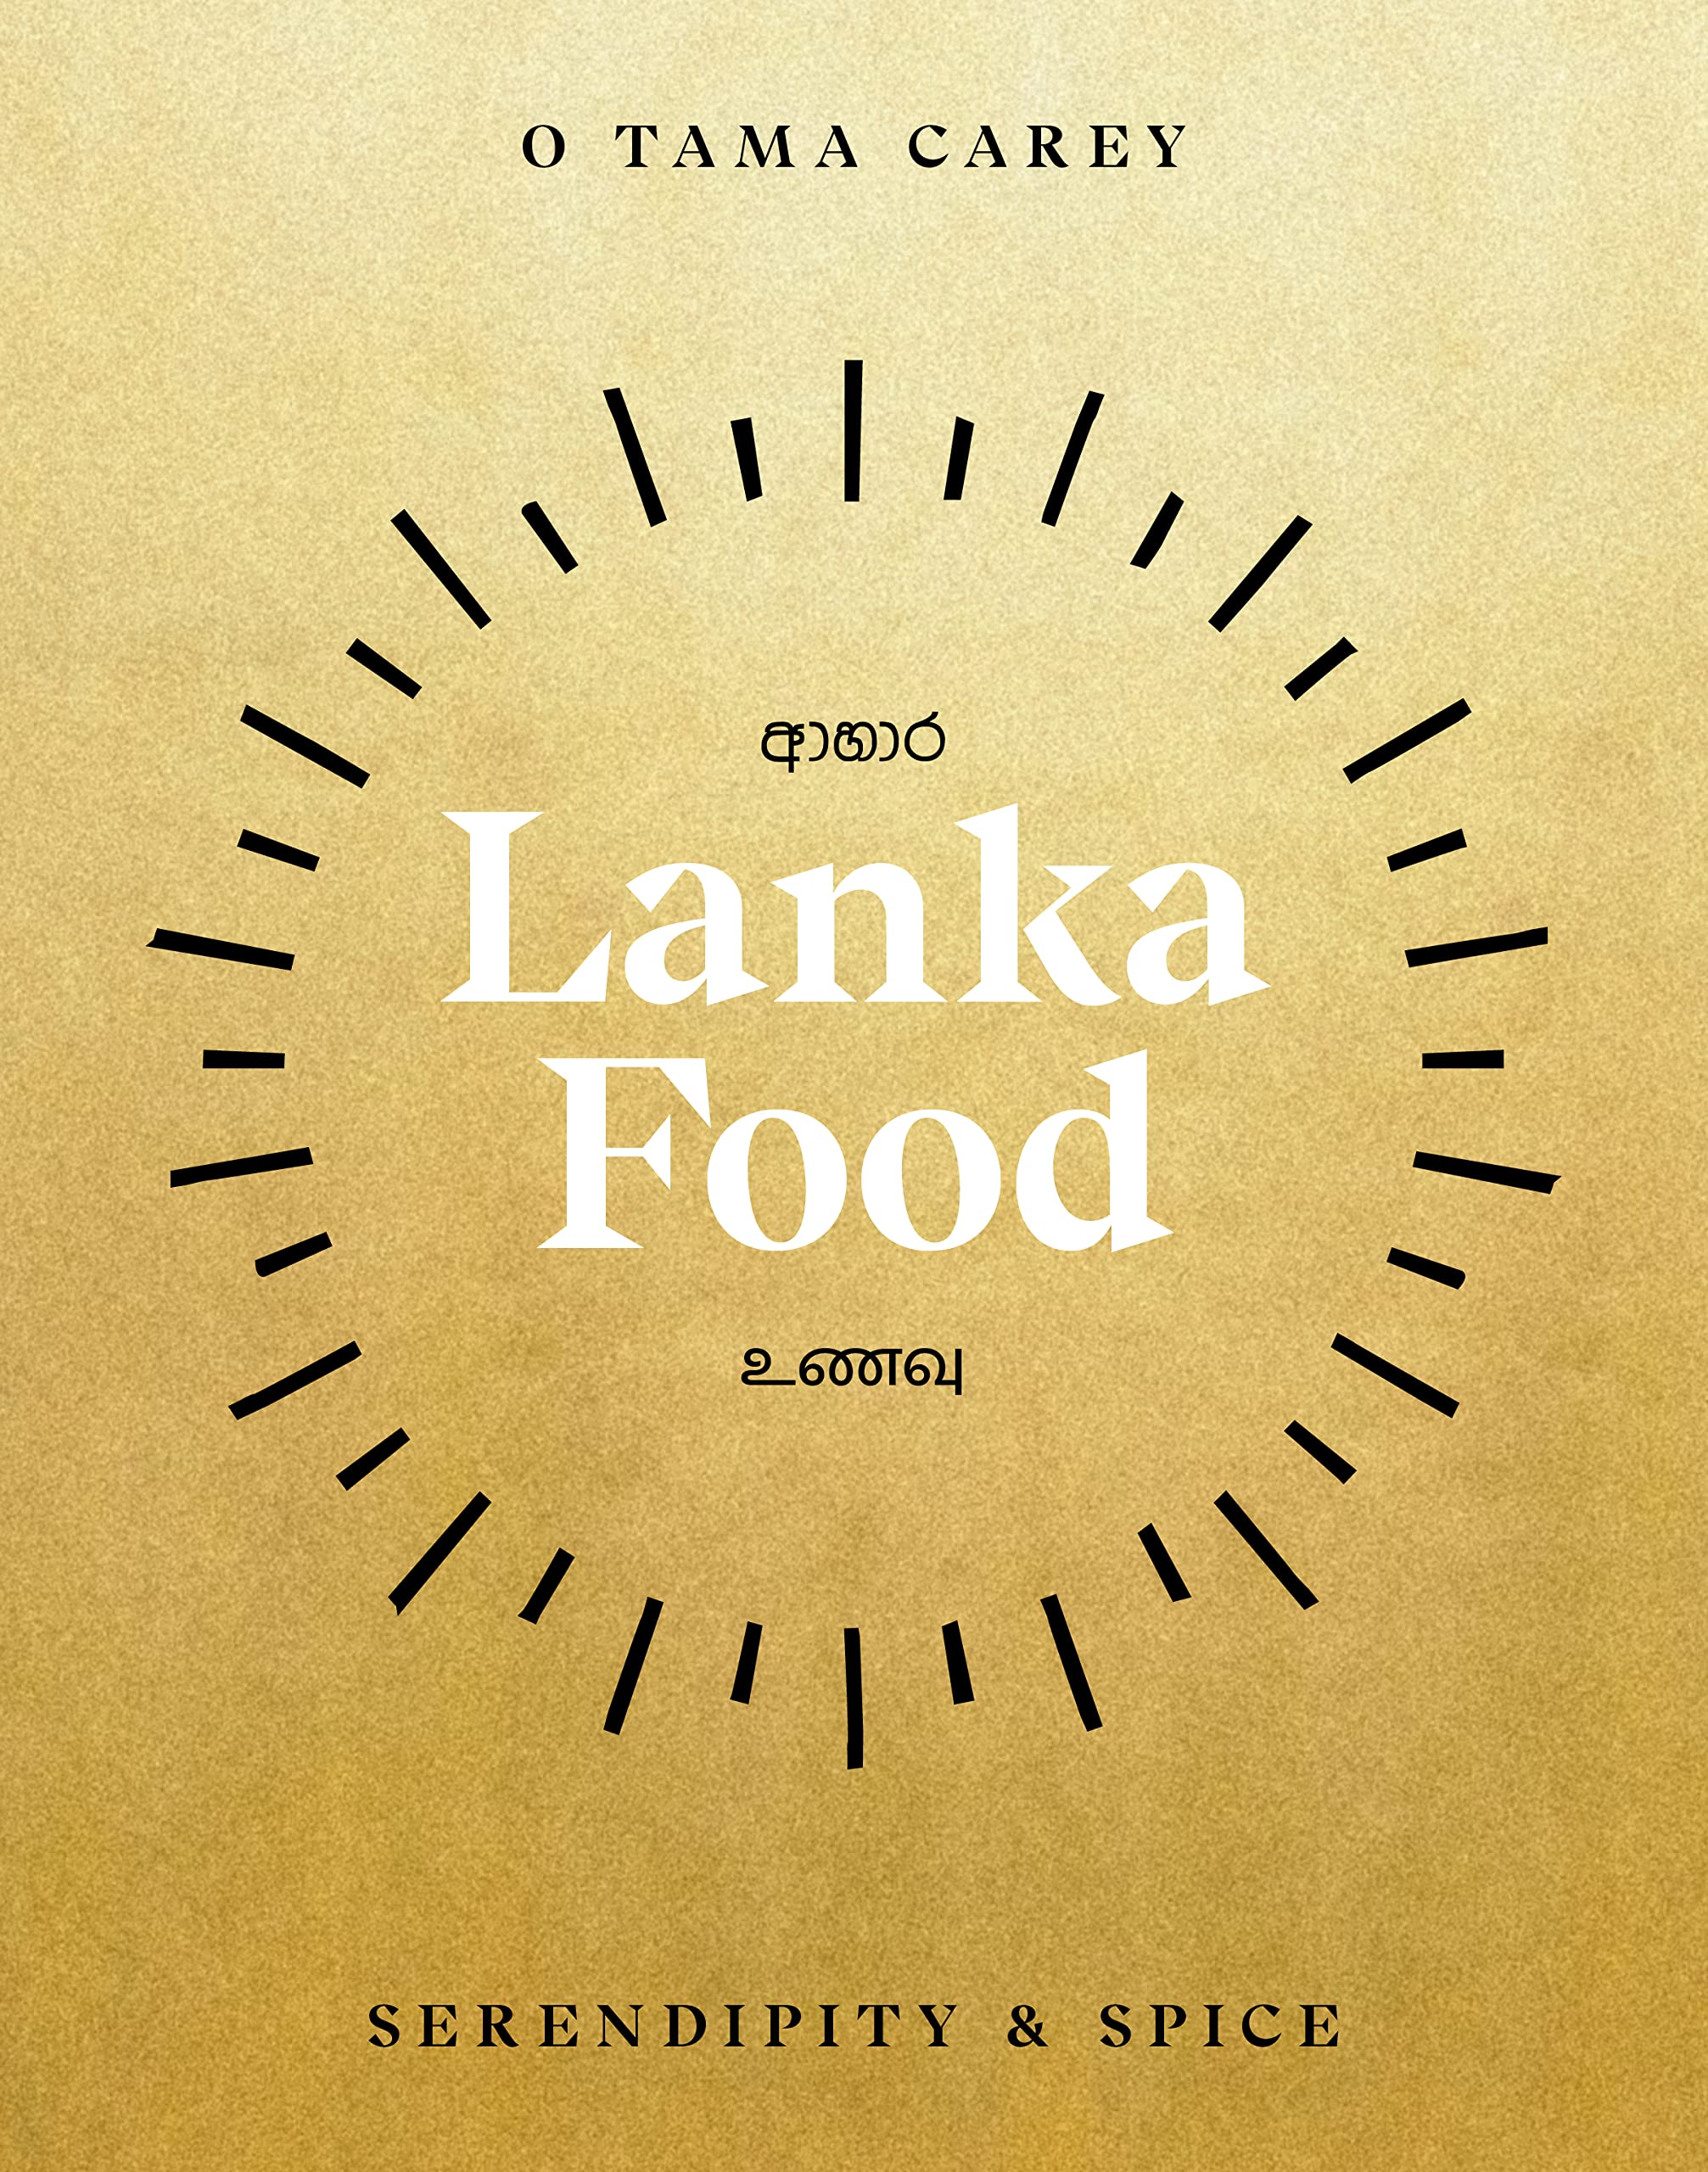 Lanka Food: Serendipity & Spice (O Tama Carey)